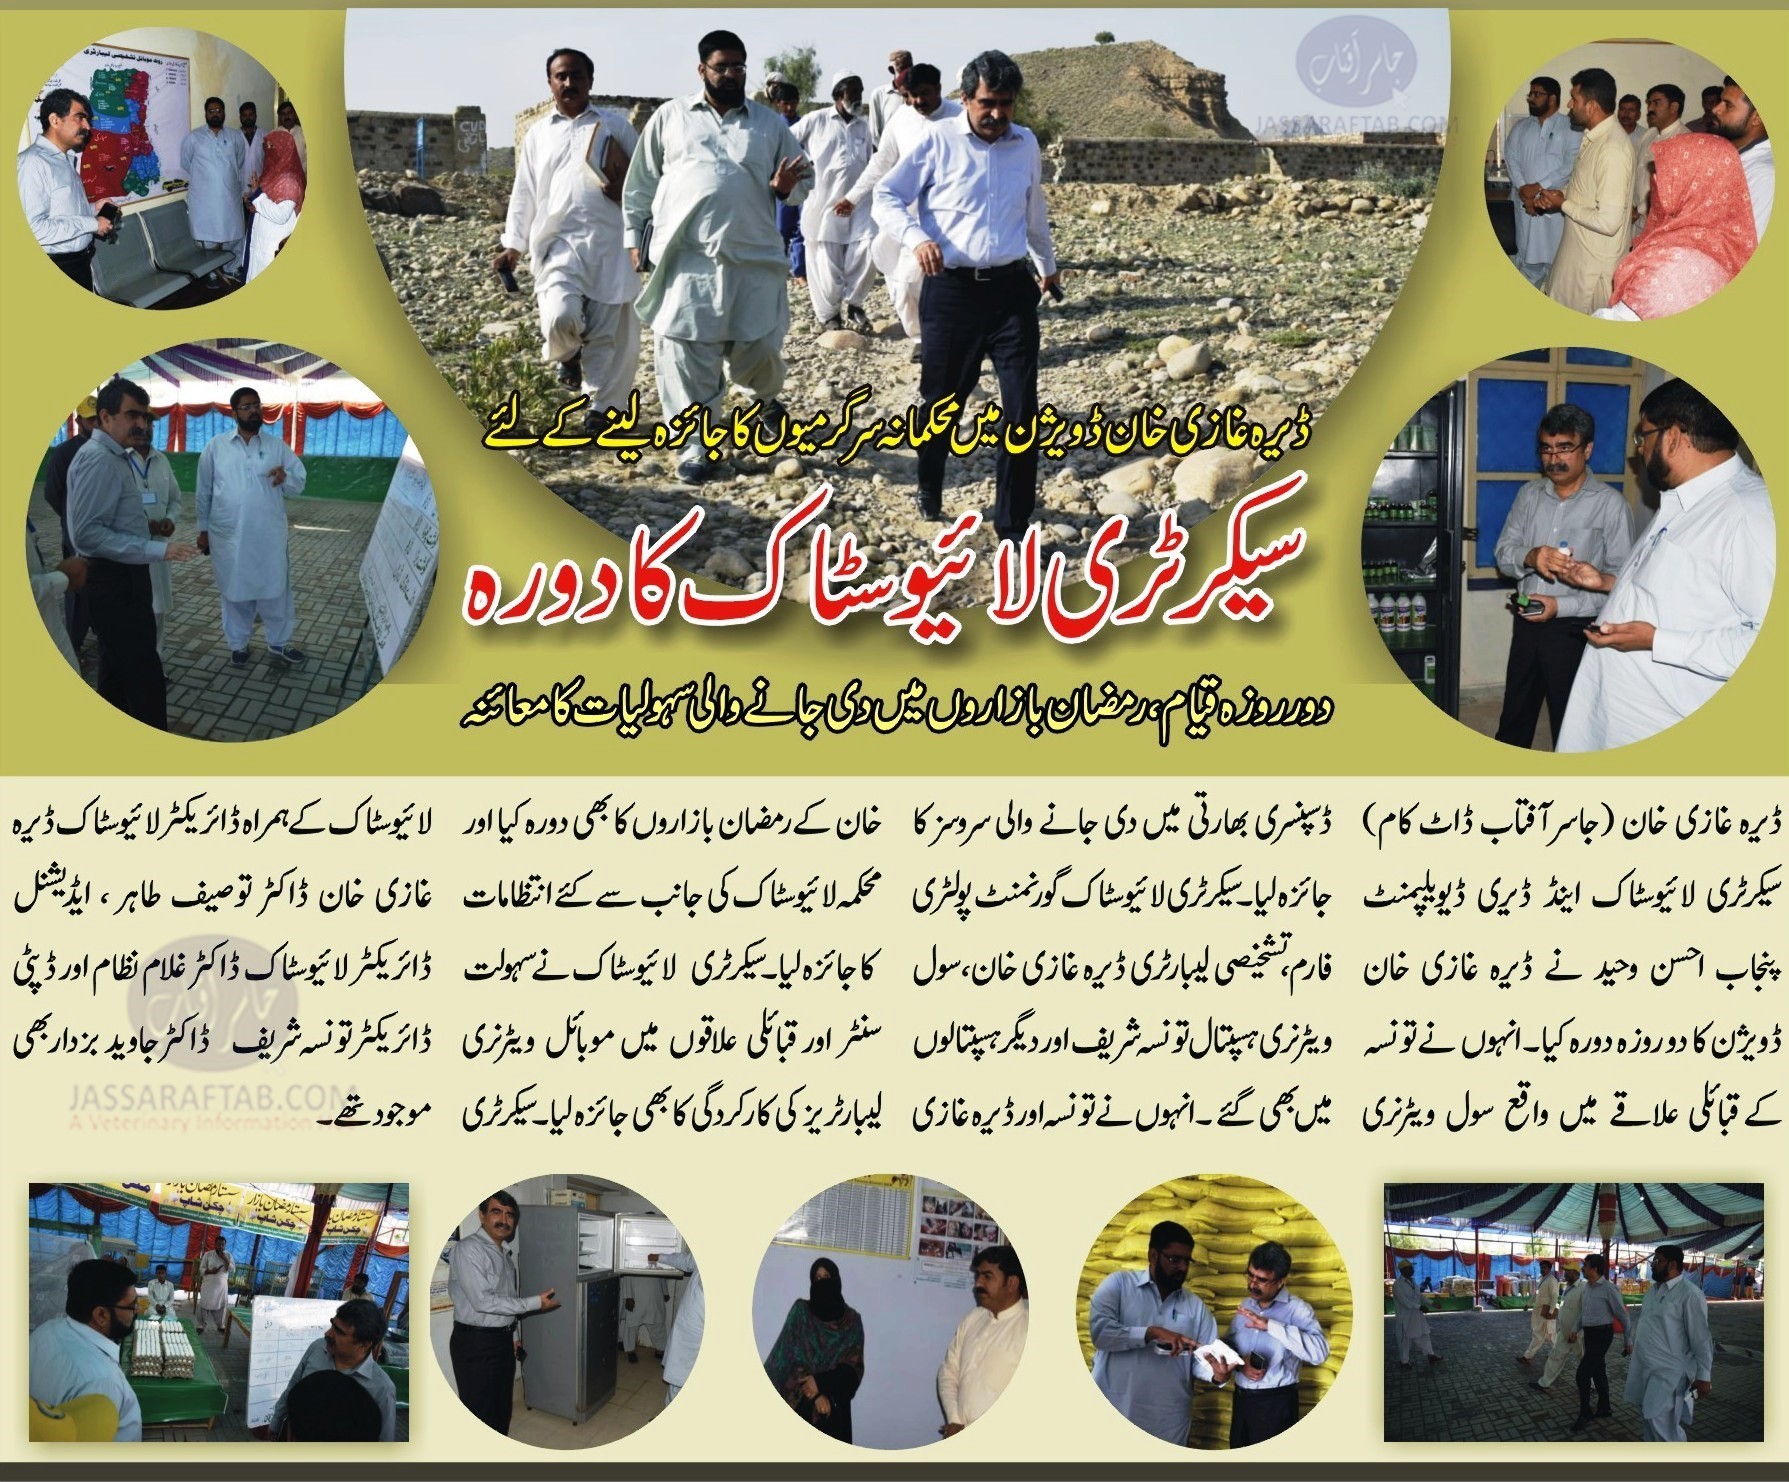 Secretary L&DD - Livestock Punjab Ahsan Waheed visited DG Khan Division